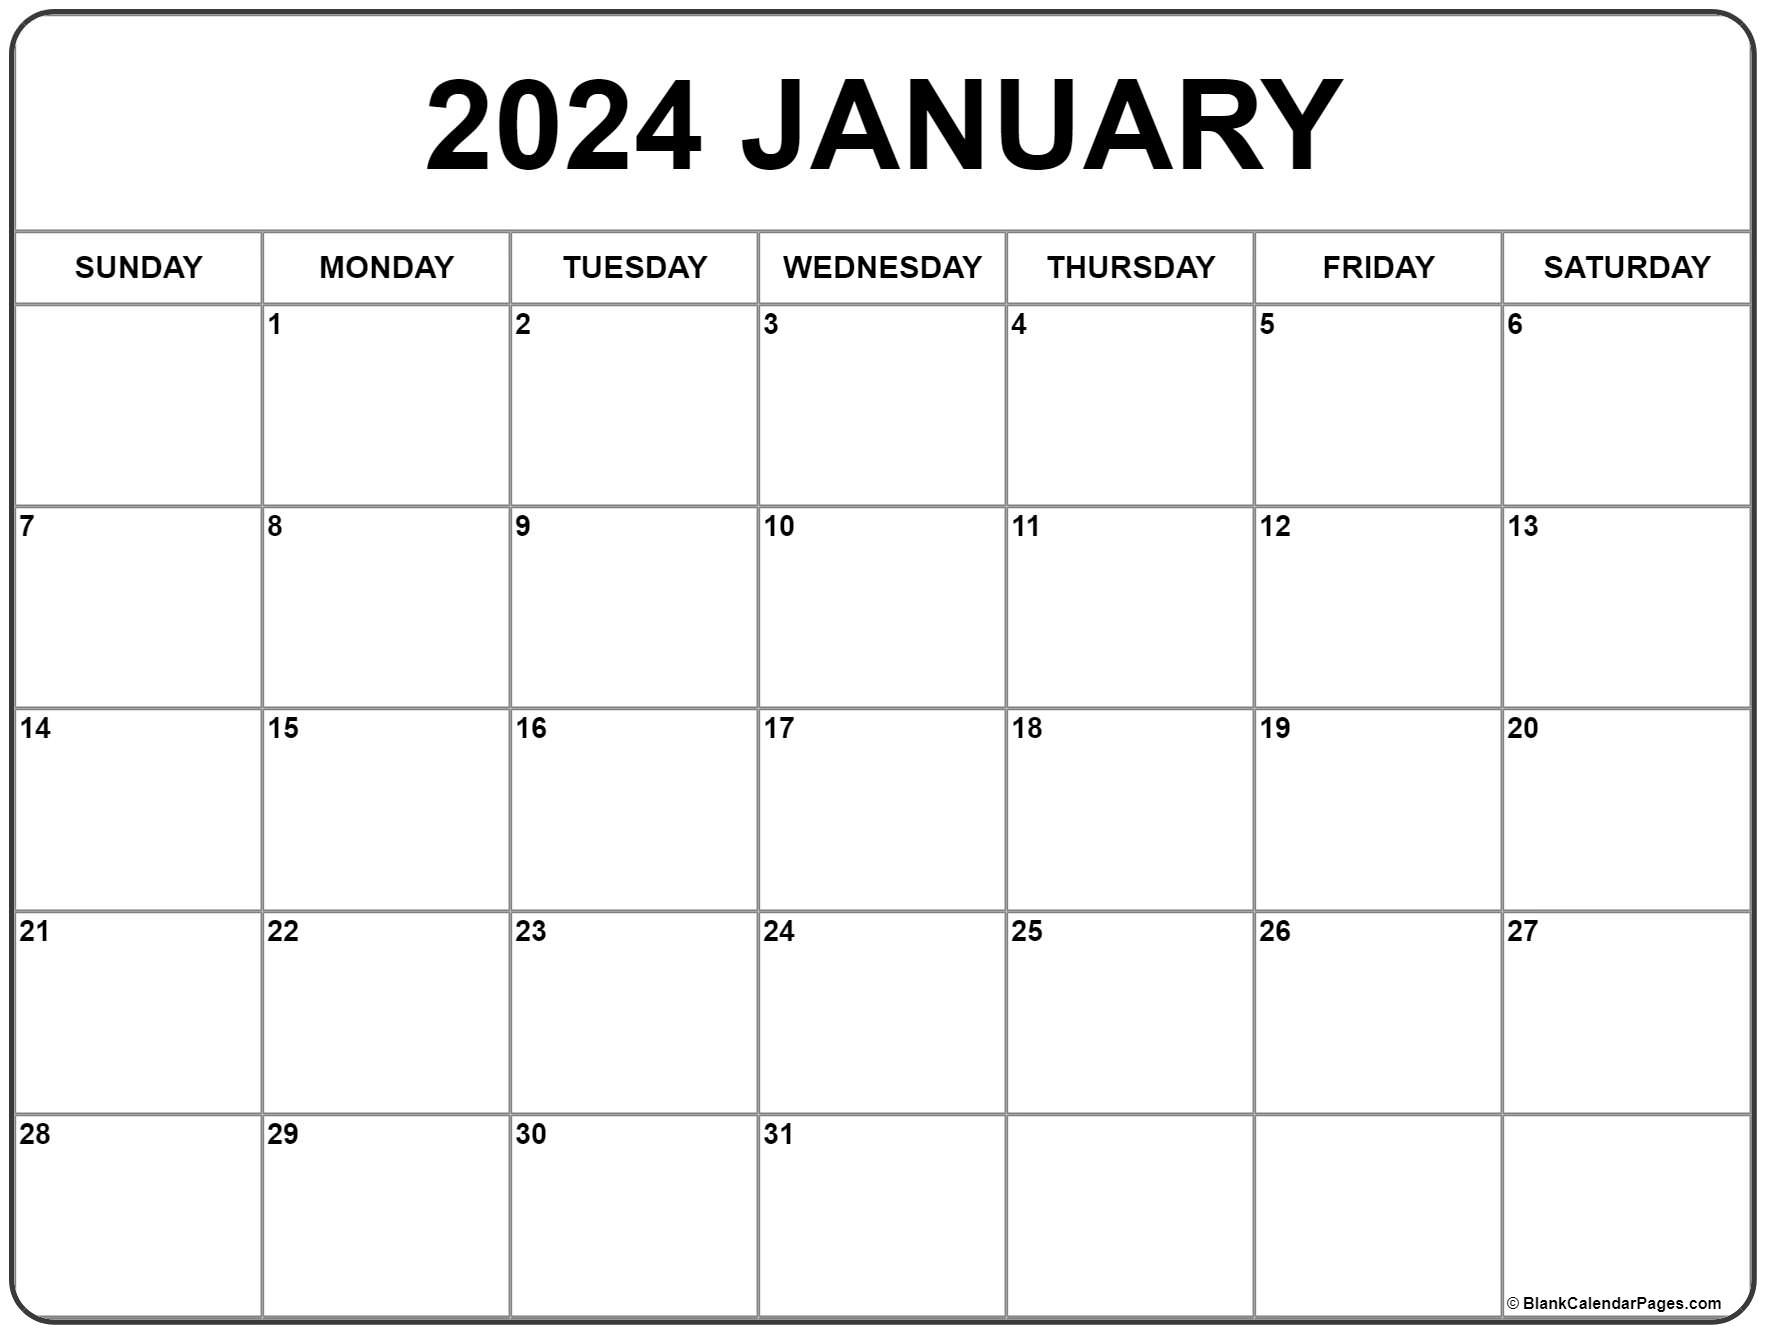 January 2024 Calendar | Free Printable Calendar for Free Printable Calendar 2024 January